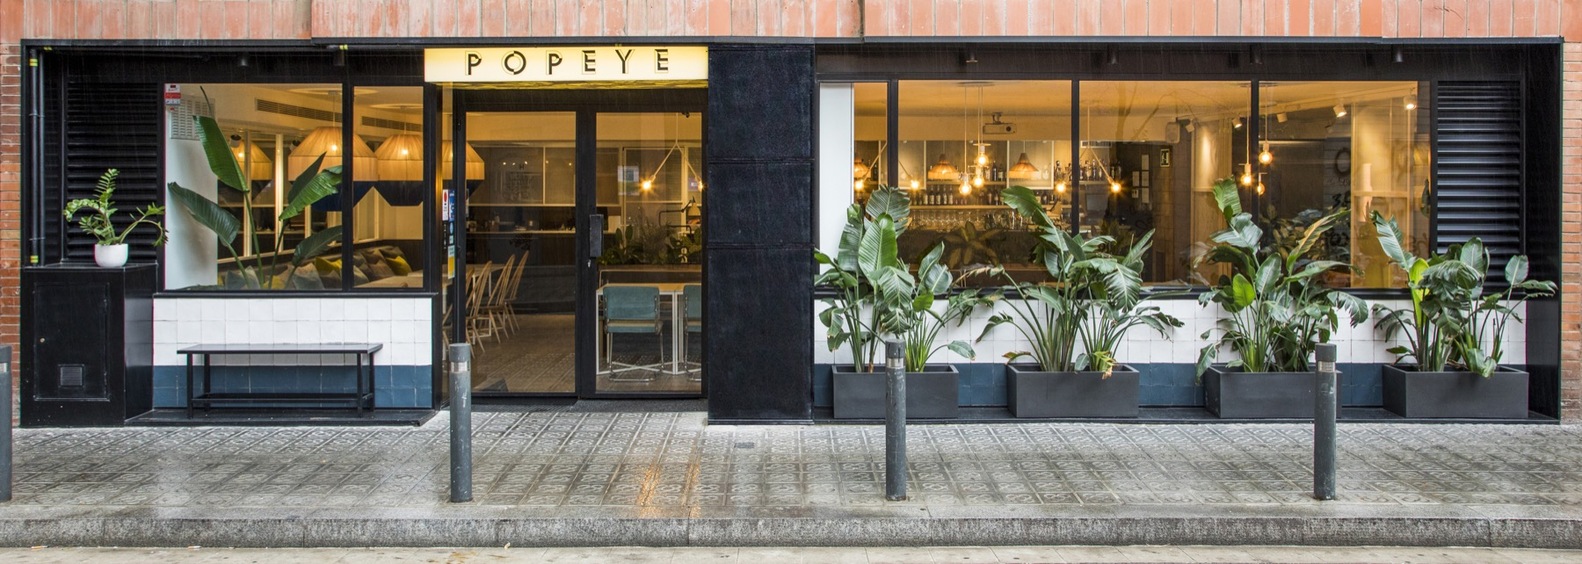 Popeye-restaurant-estudio-miriam-barrio (5)